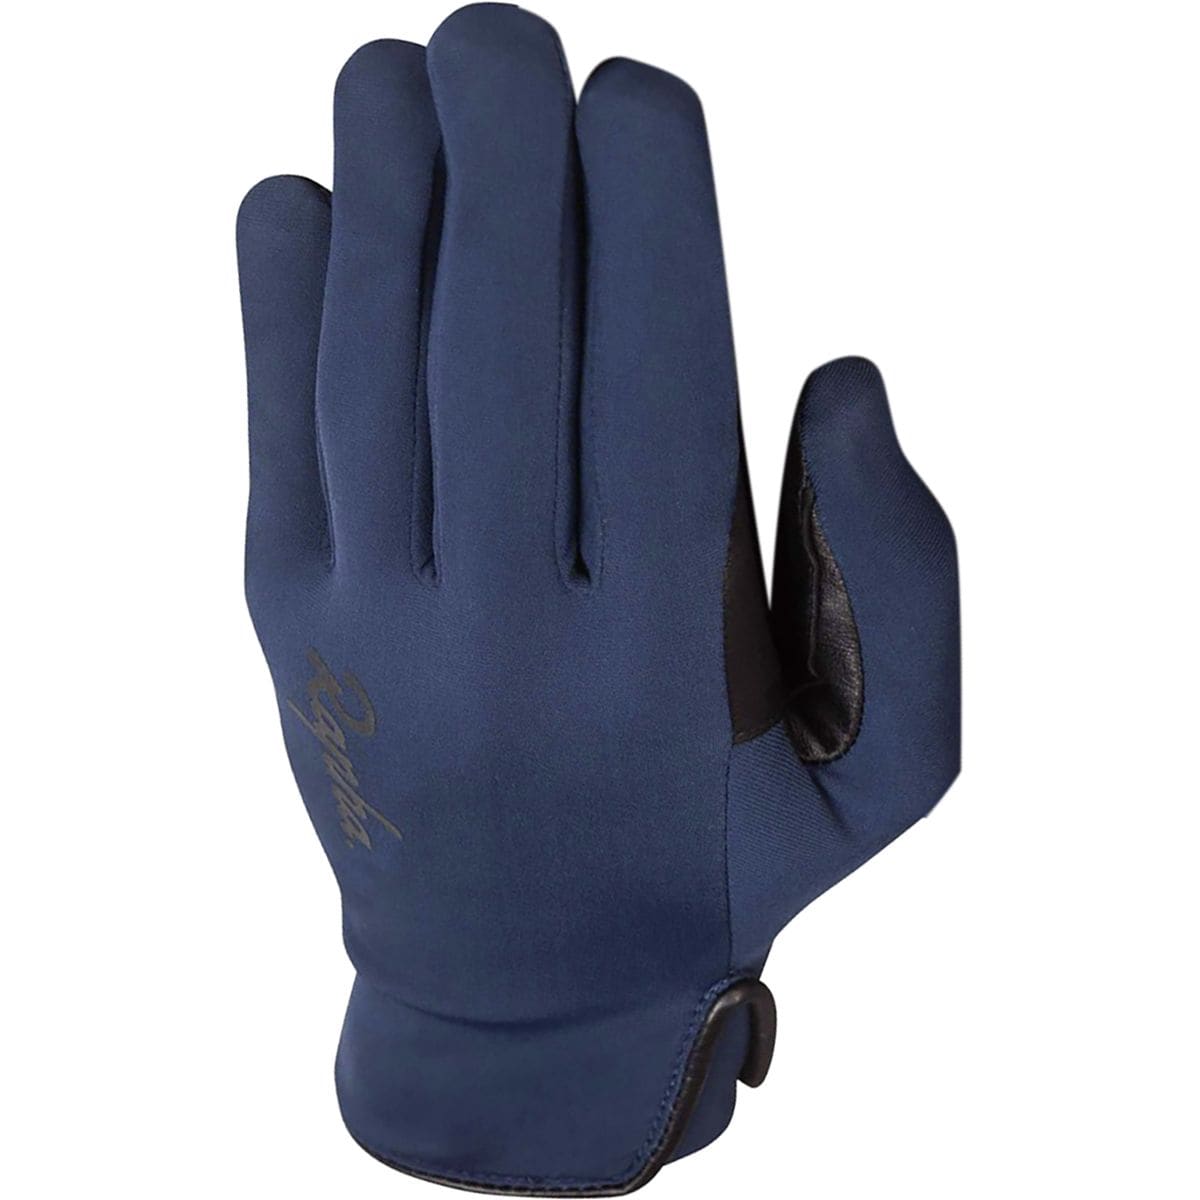 Rapha Classic Glove - Men's